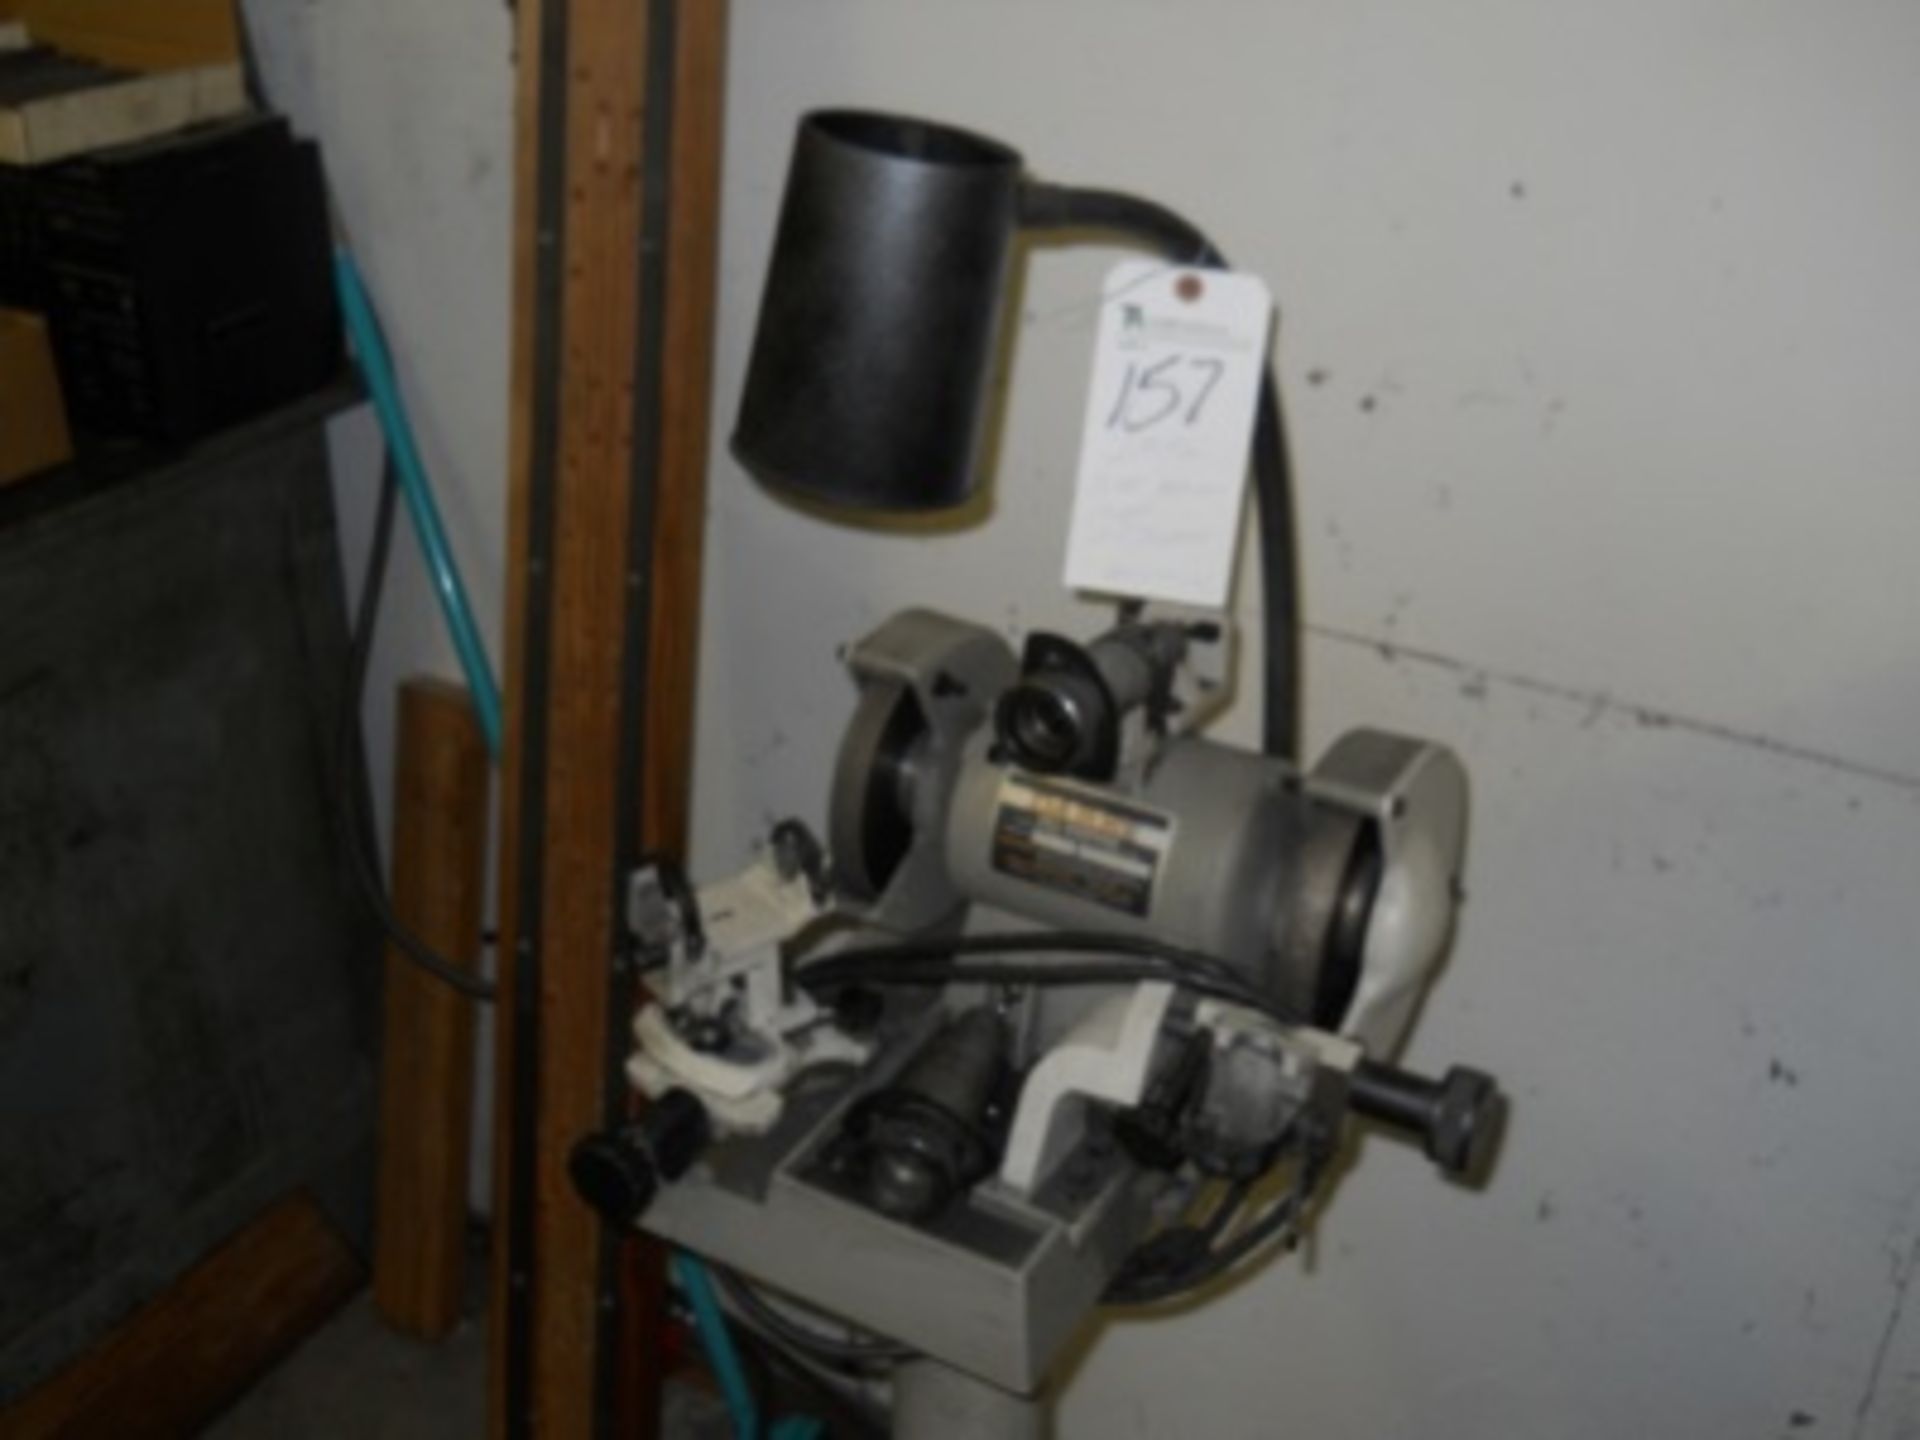 Darex 1/3hp Drill Sharpener, 3450 RPM,